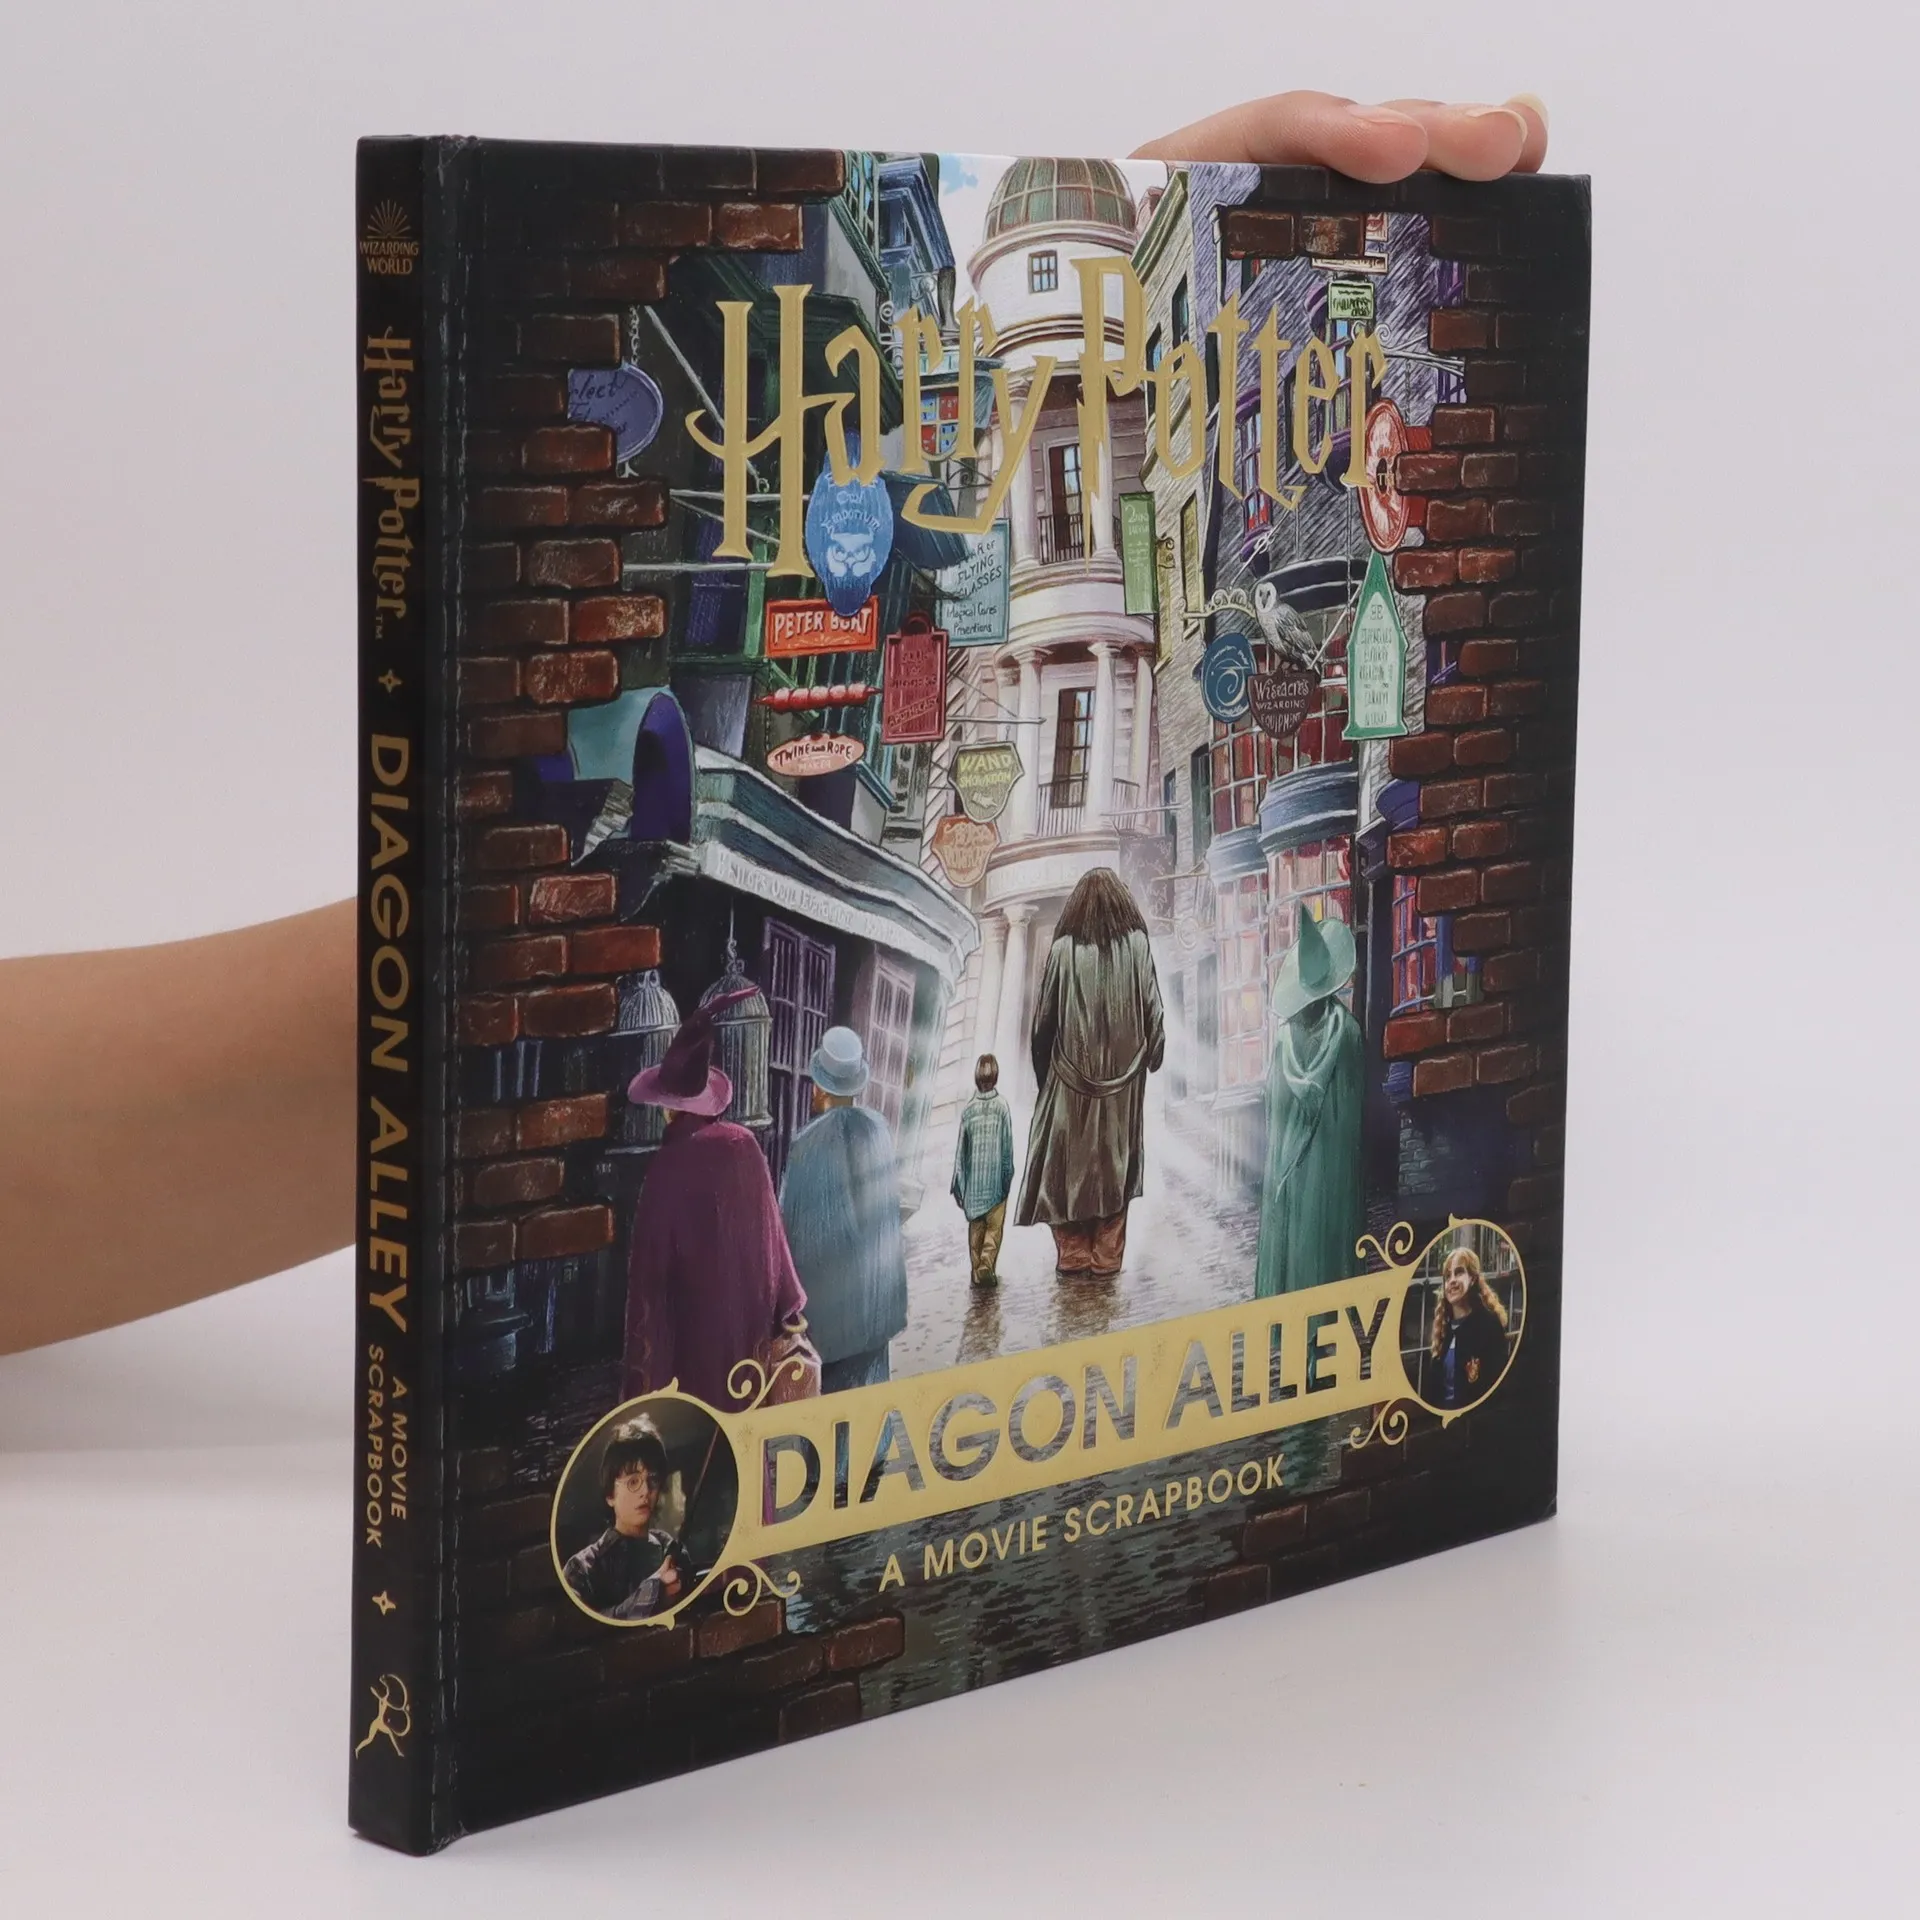 Harry Potter Diagon Alley Movie Scrapbook - By Jody Revenson